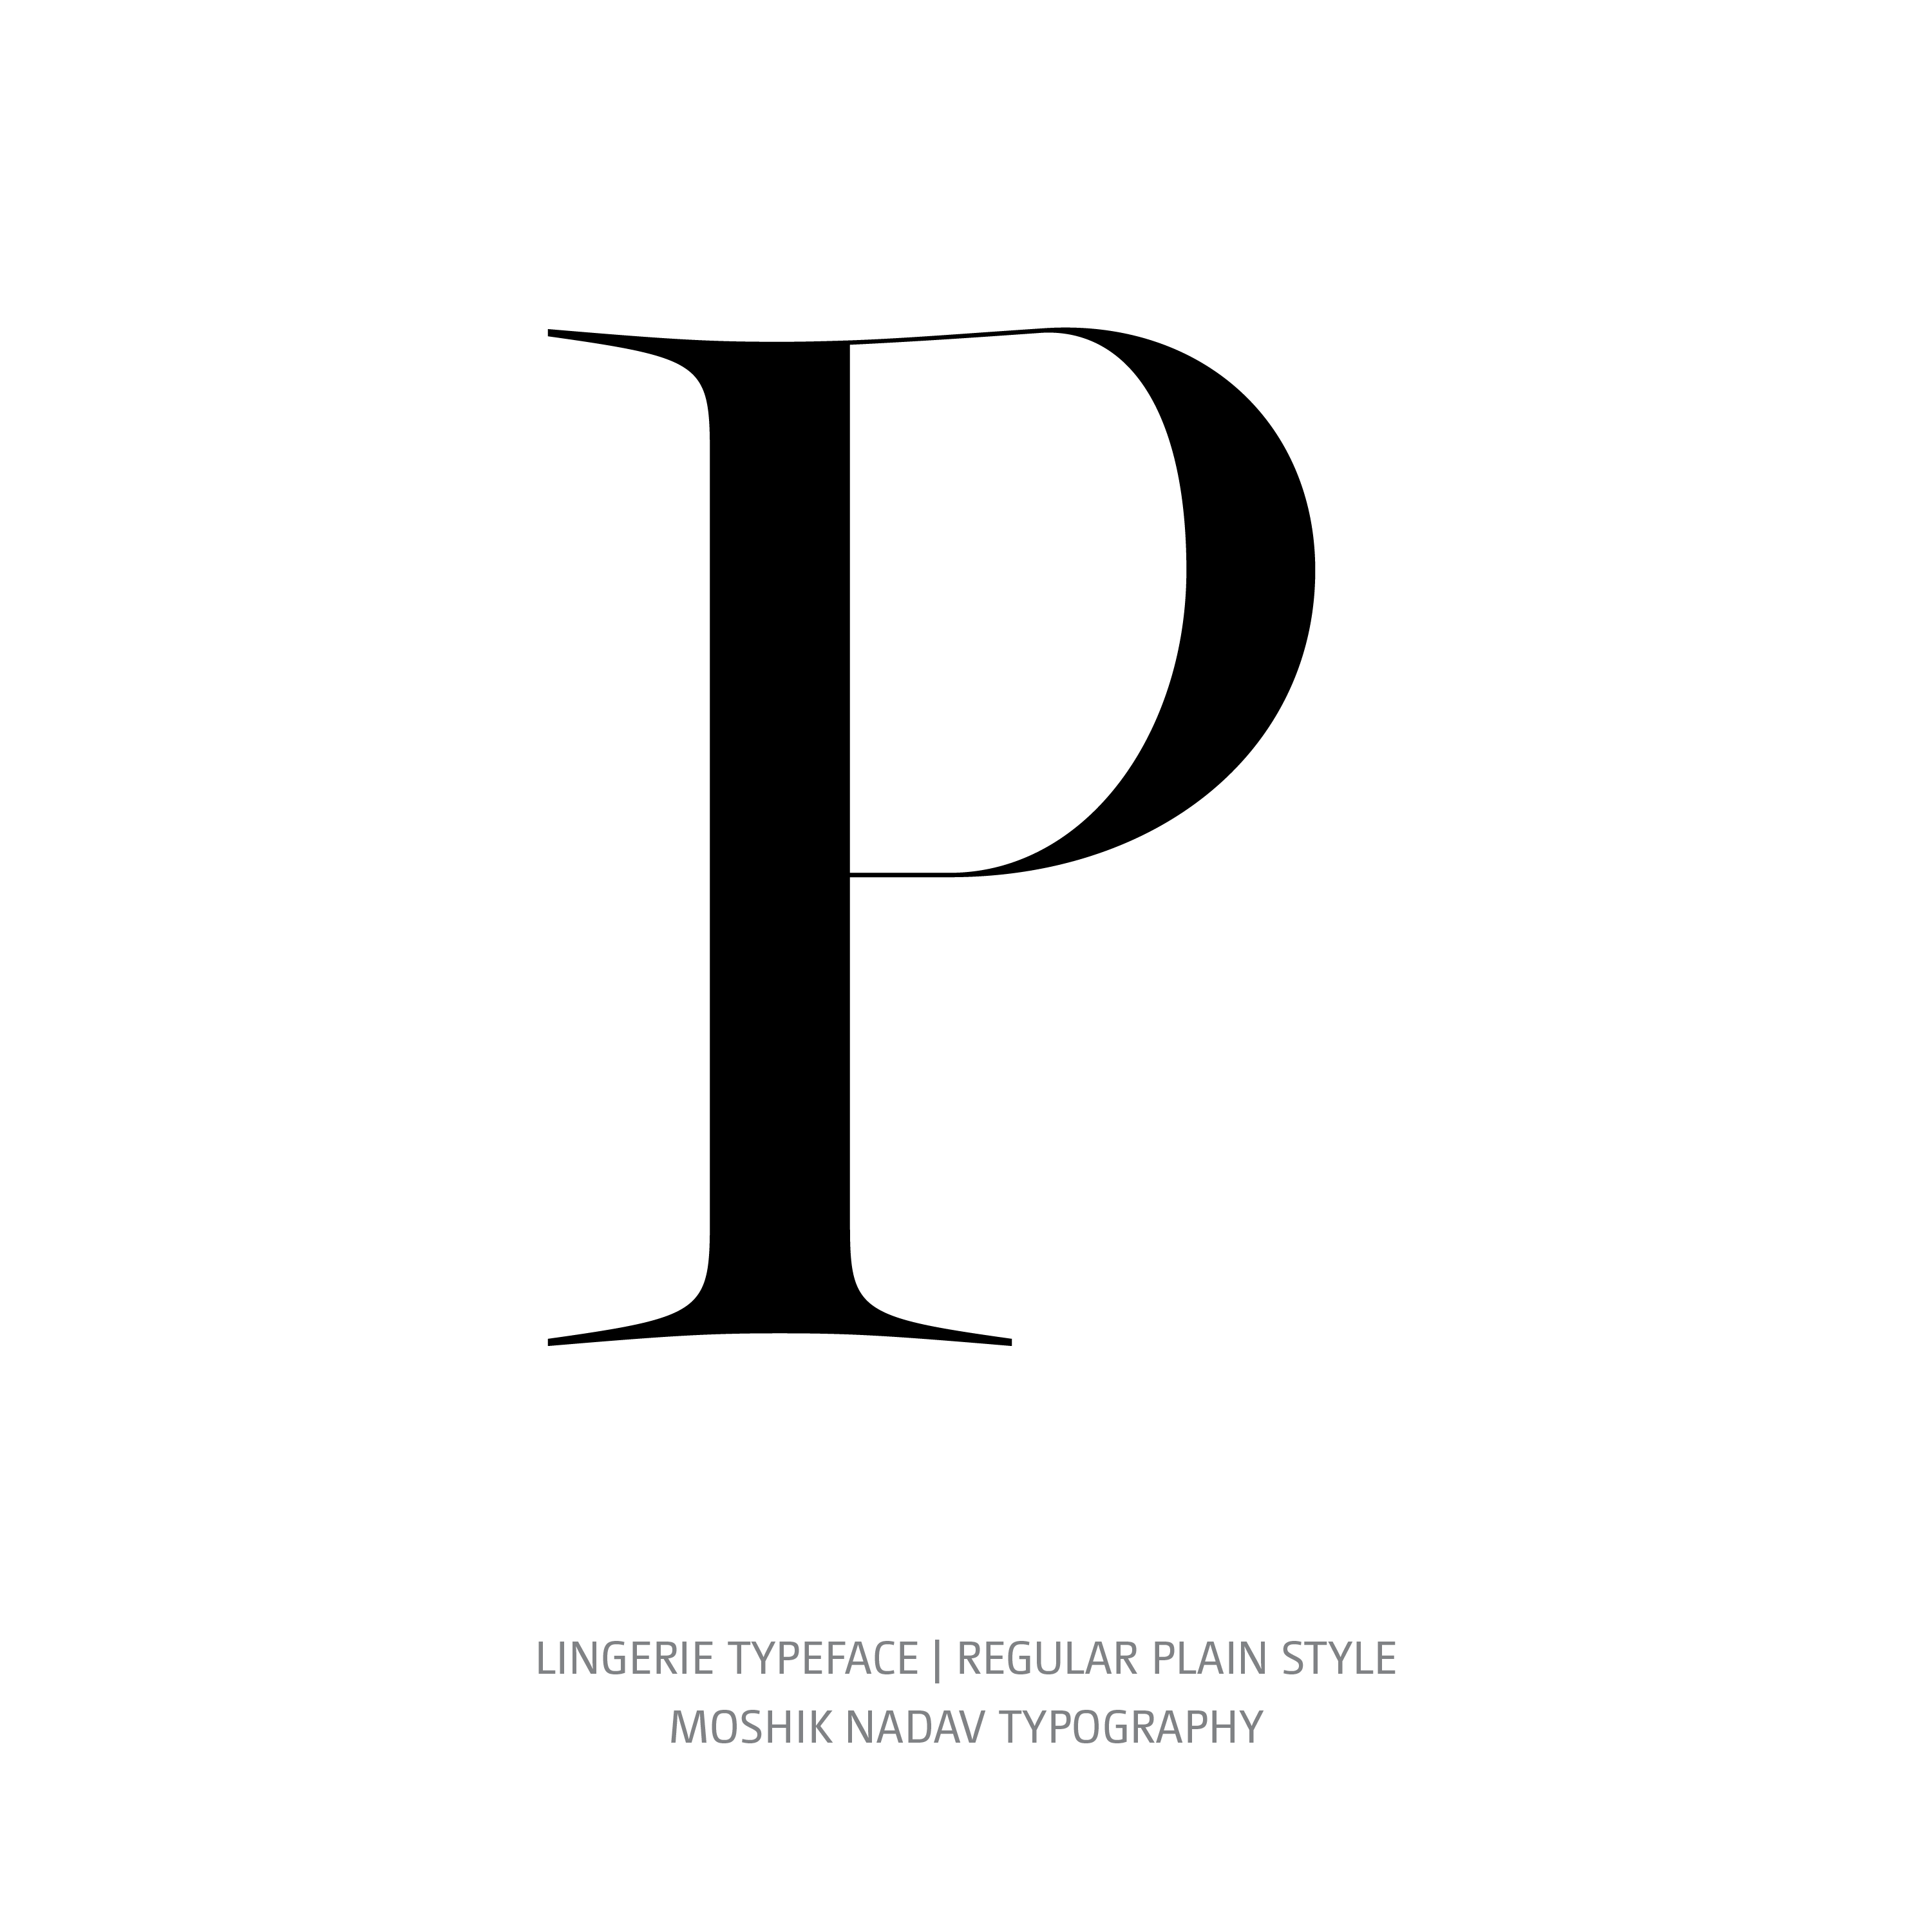 Lingerie Typeface Regular Plain P